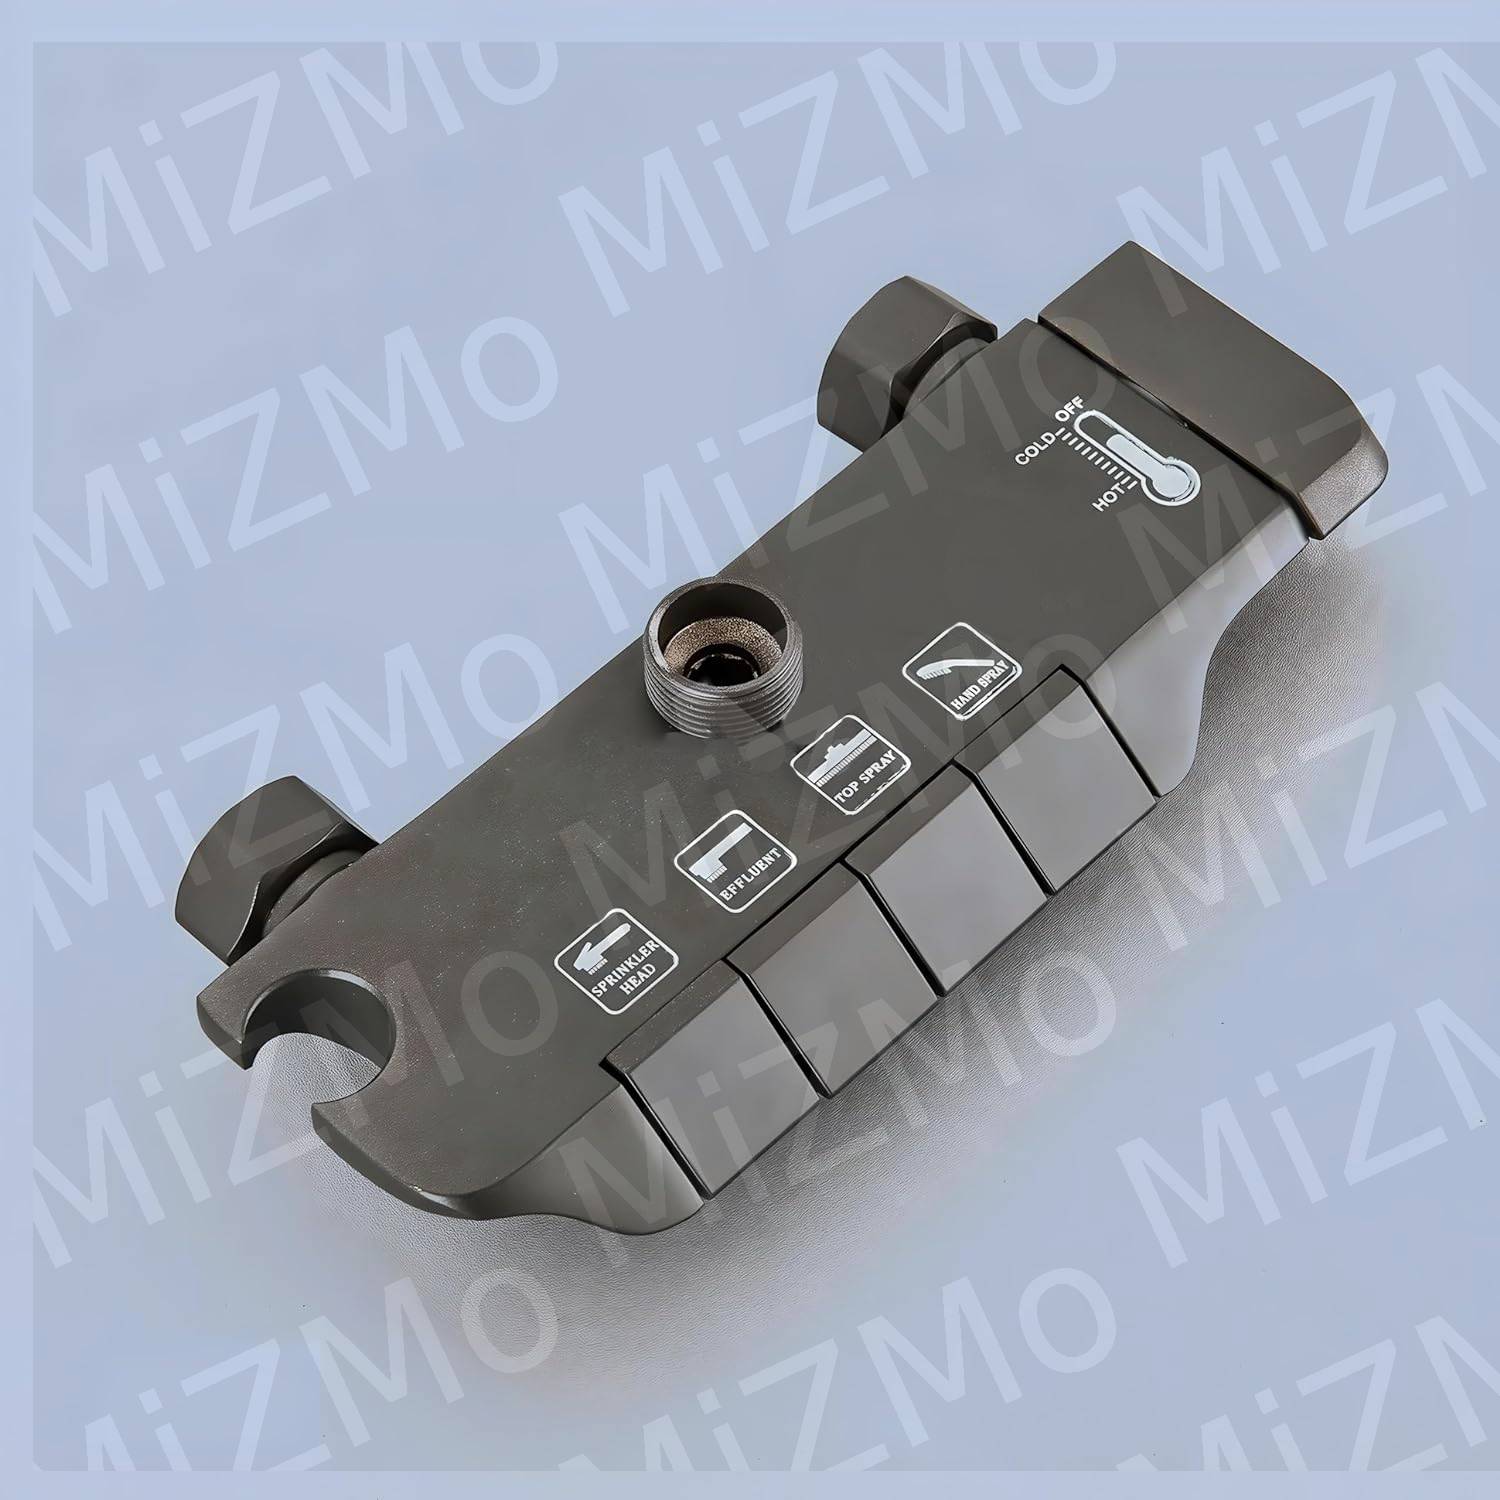 MiZMo Luxury Black Matte Rainfall Shower Panel Set: Stainless Steel, Thermostatic Mixer, Multi-Function Handheld & Body Spray, Easy Install (Black 3)